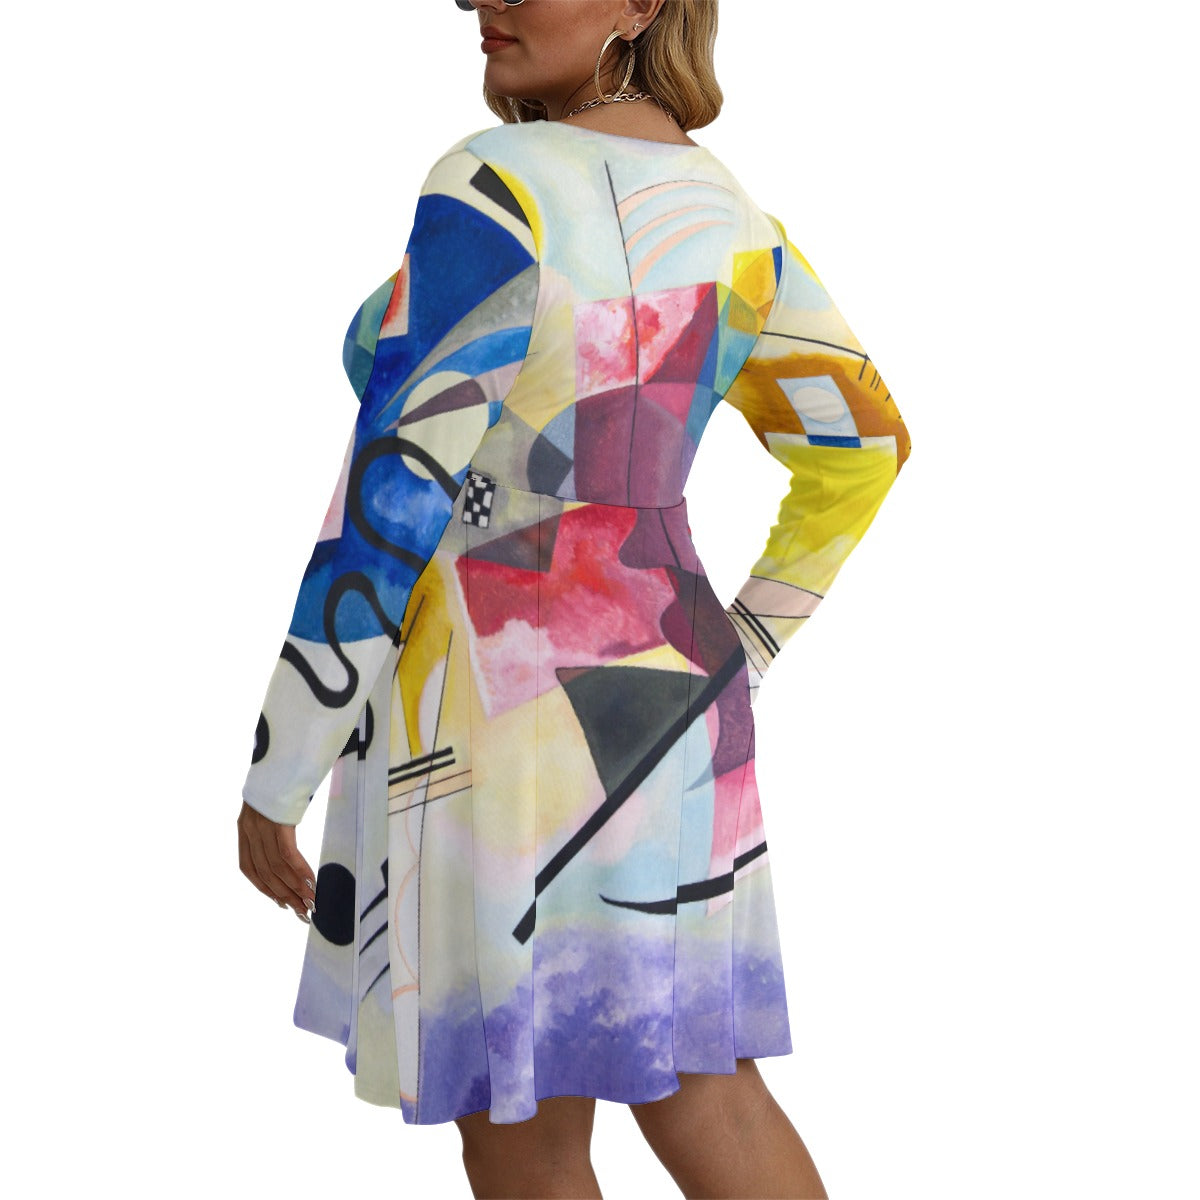 Eye-catching digital print dress for art enthusiasts